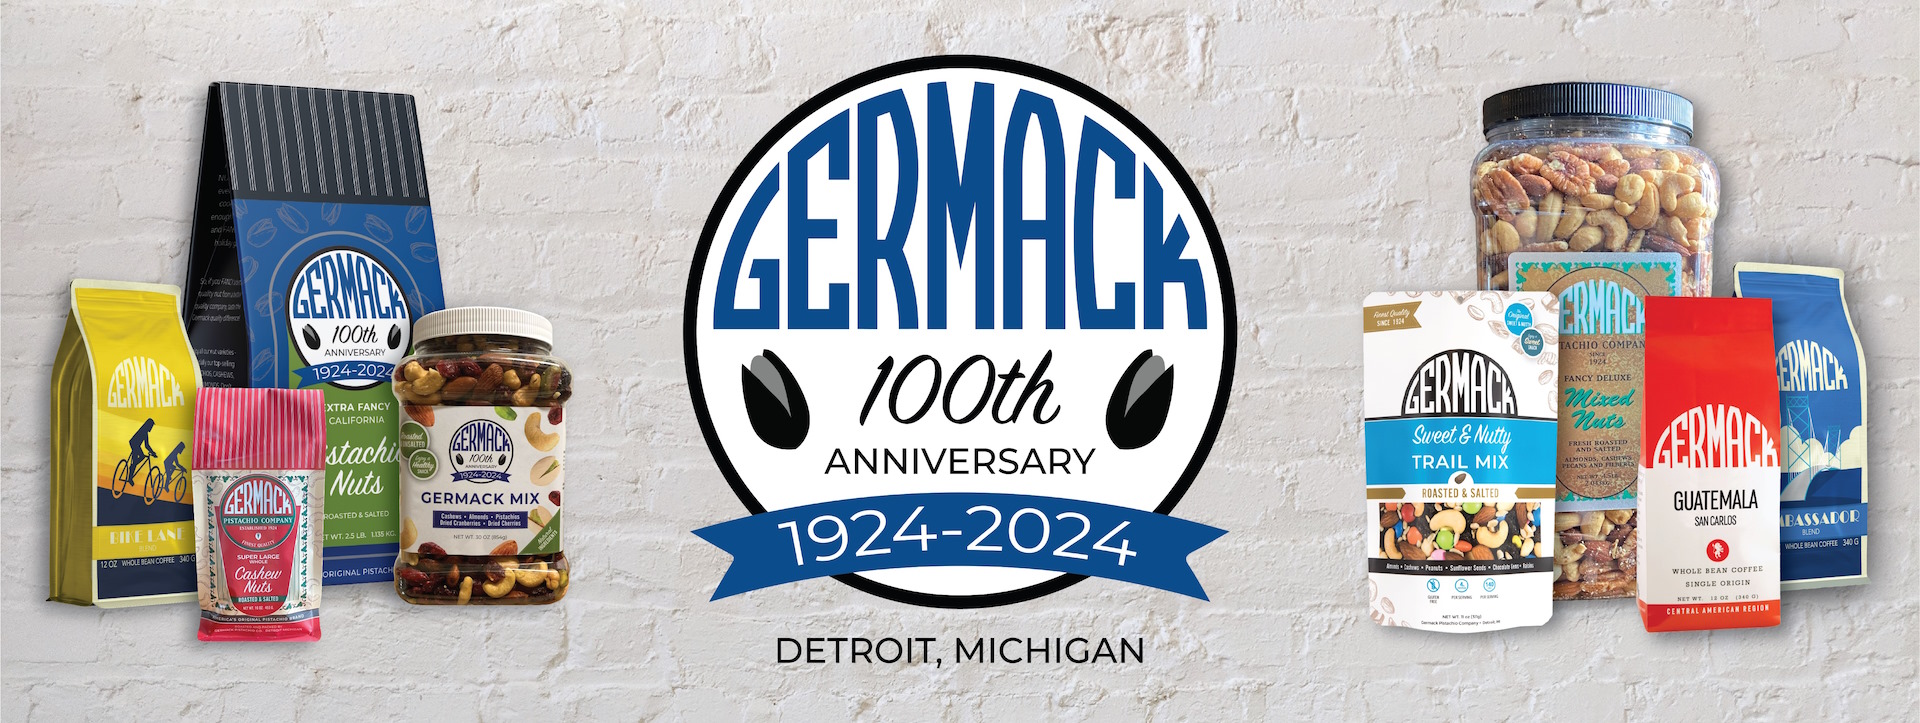 Germack 100th Anniversary 1924-2024